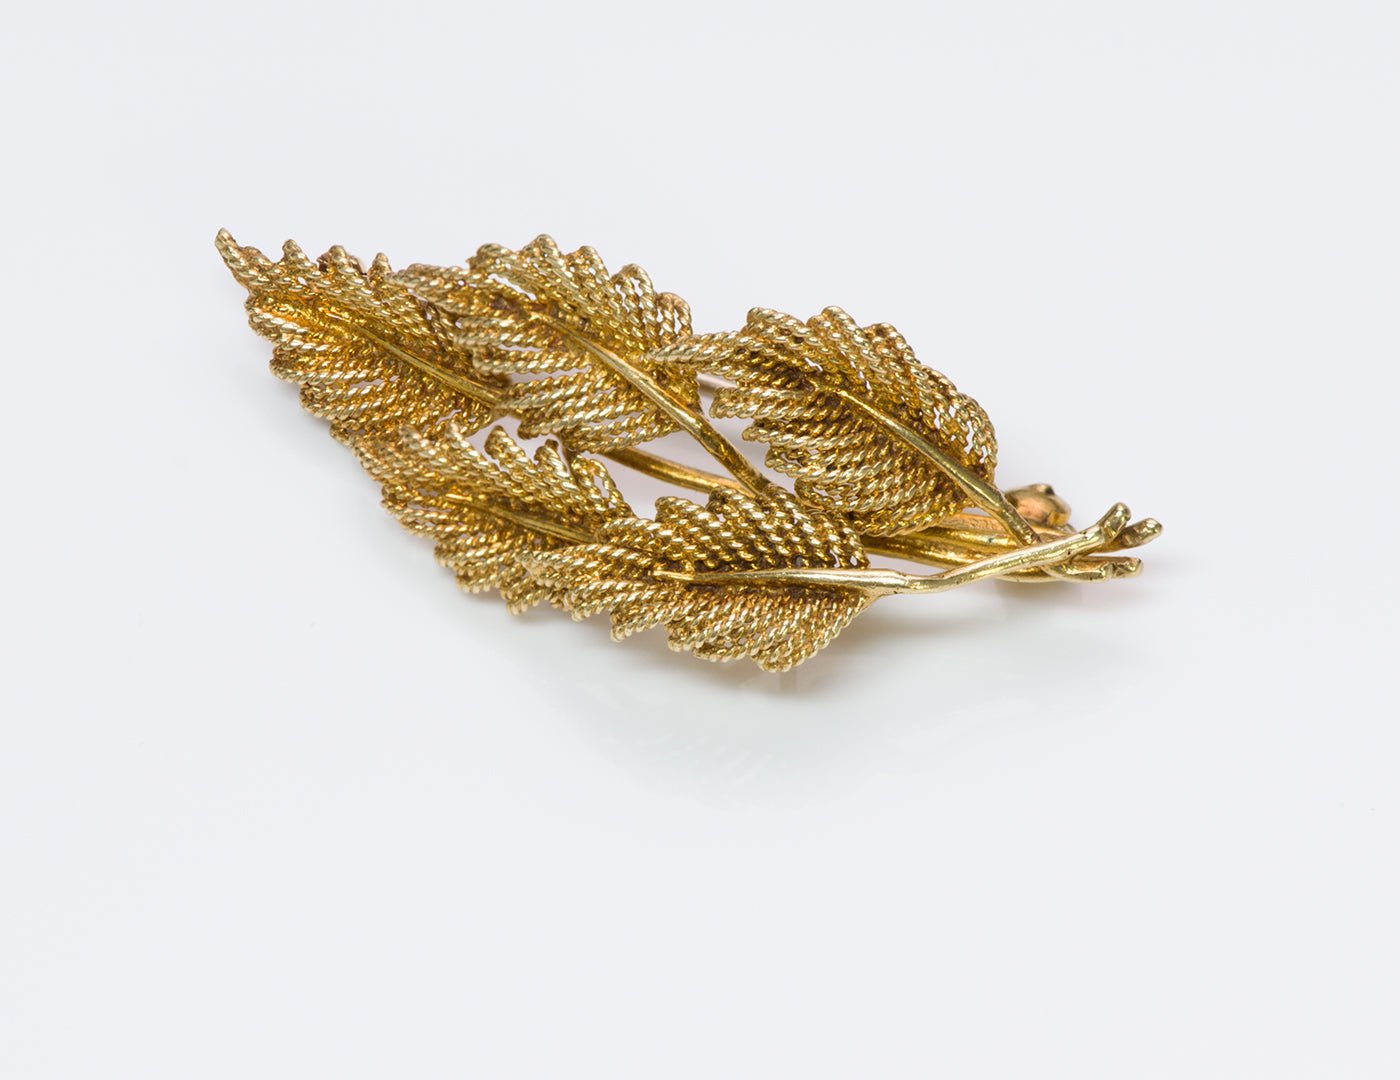 Tiffany & Co. Gold Brooch